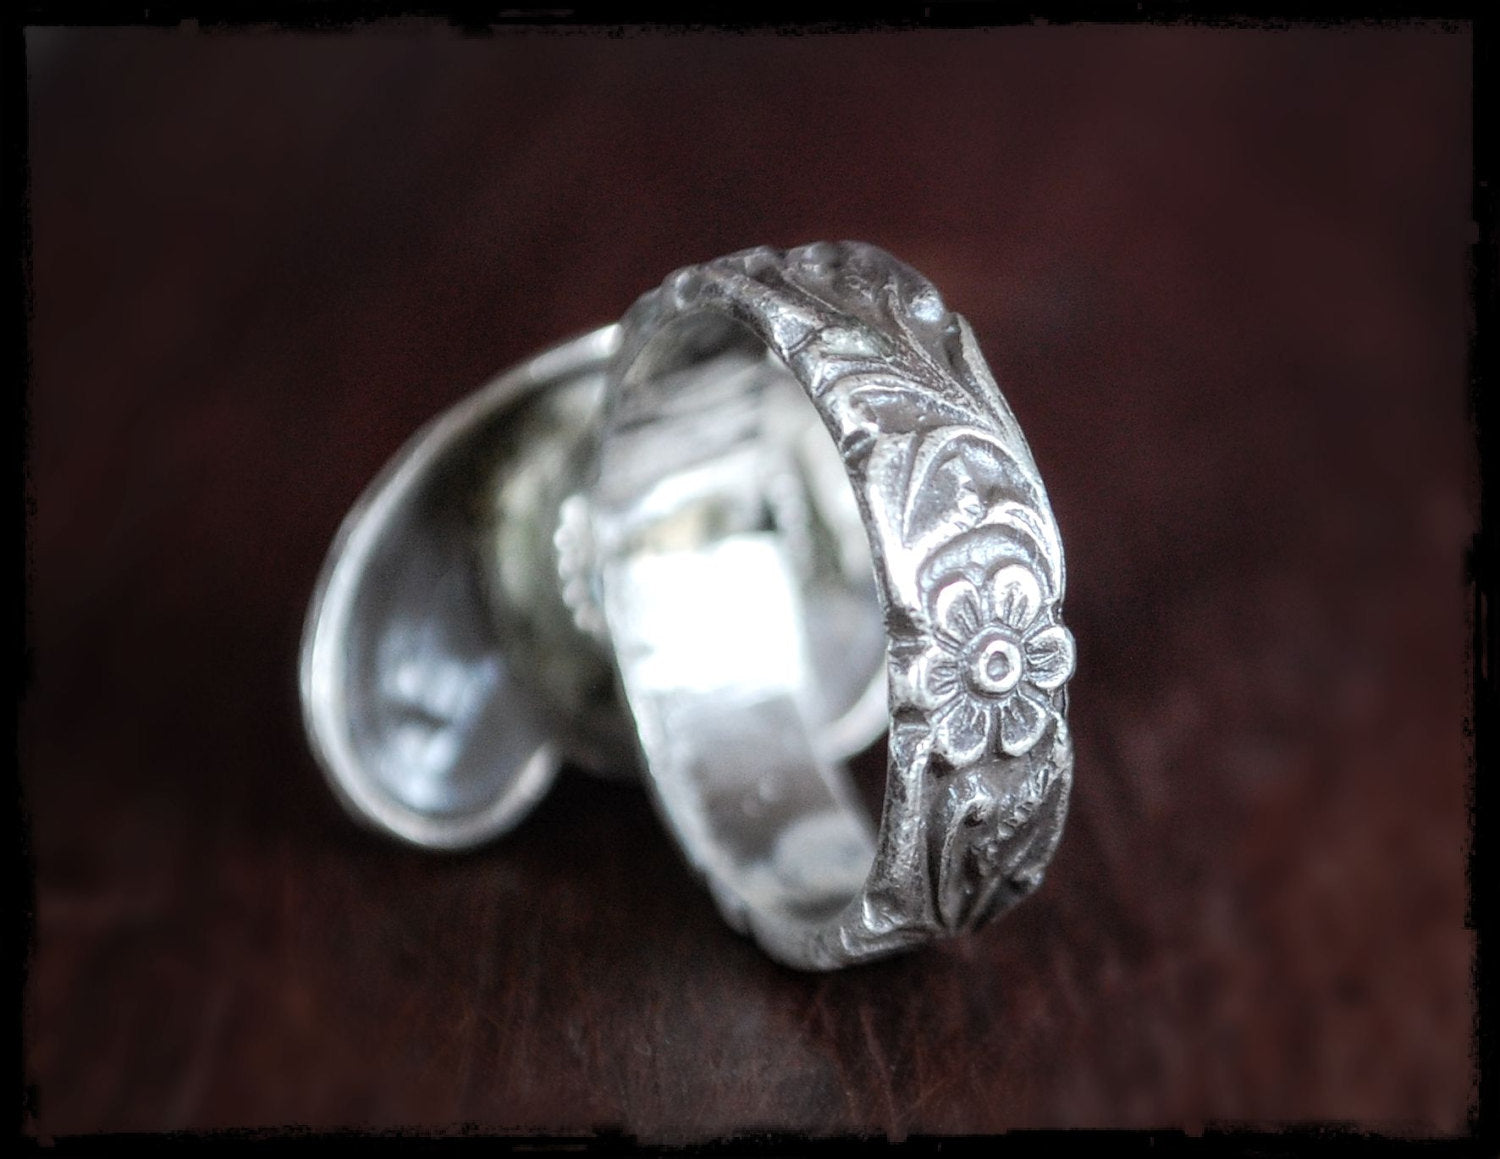 Rajasthan Coral Paisley Ring - Size 7.5